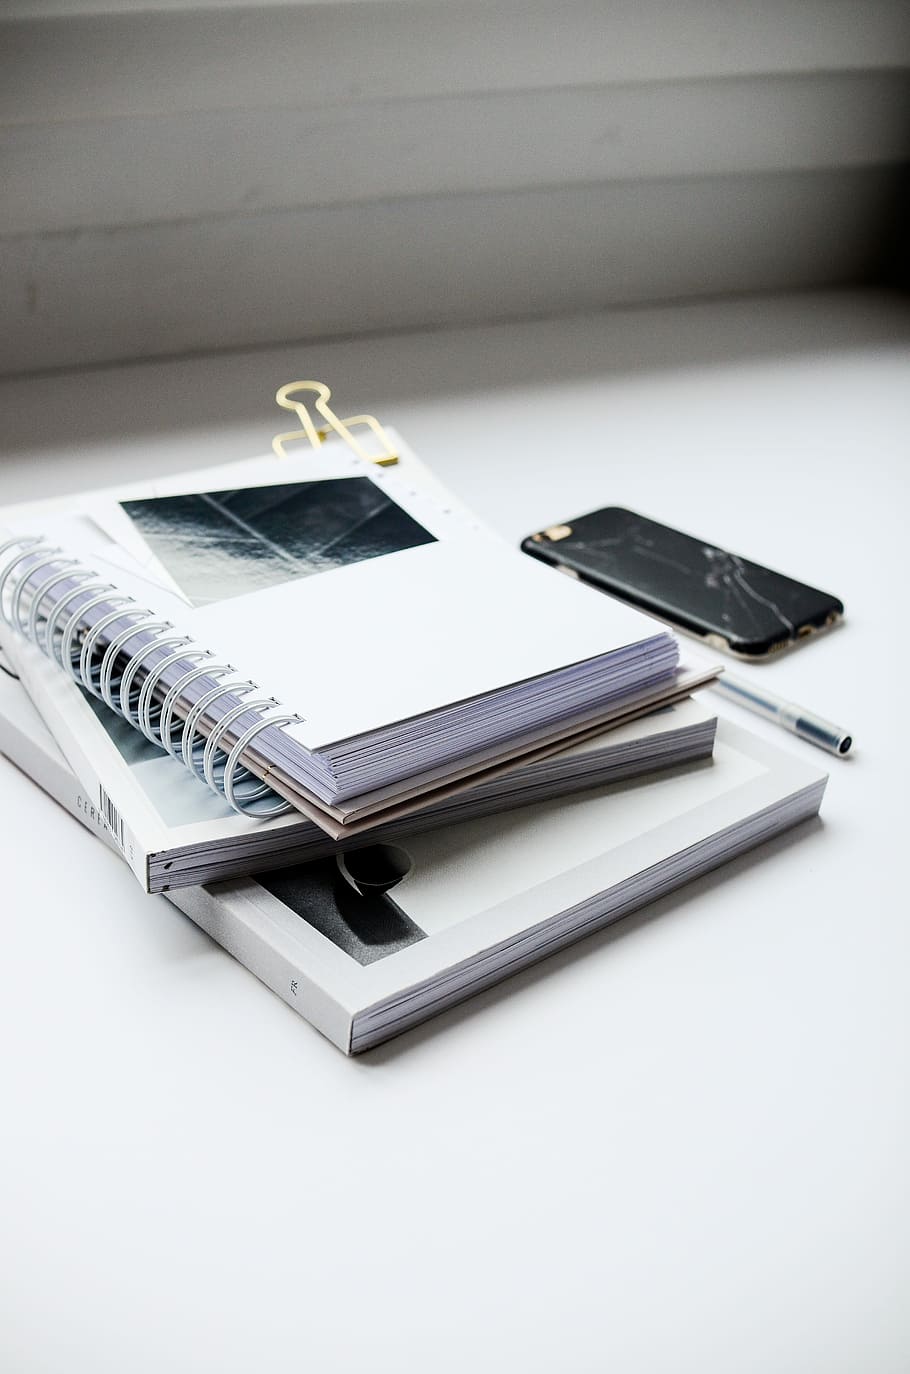 HD wallpaper: white spiral notebook beside black smartphone